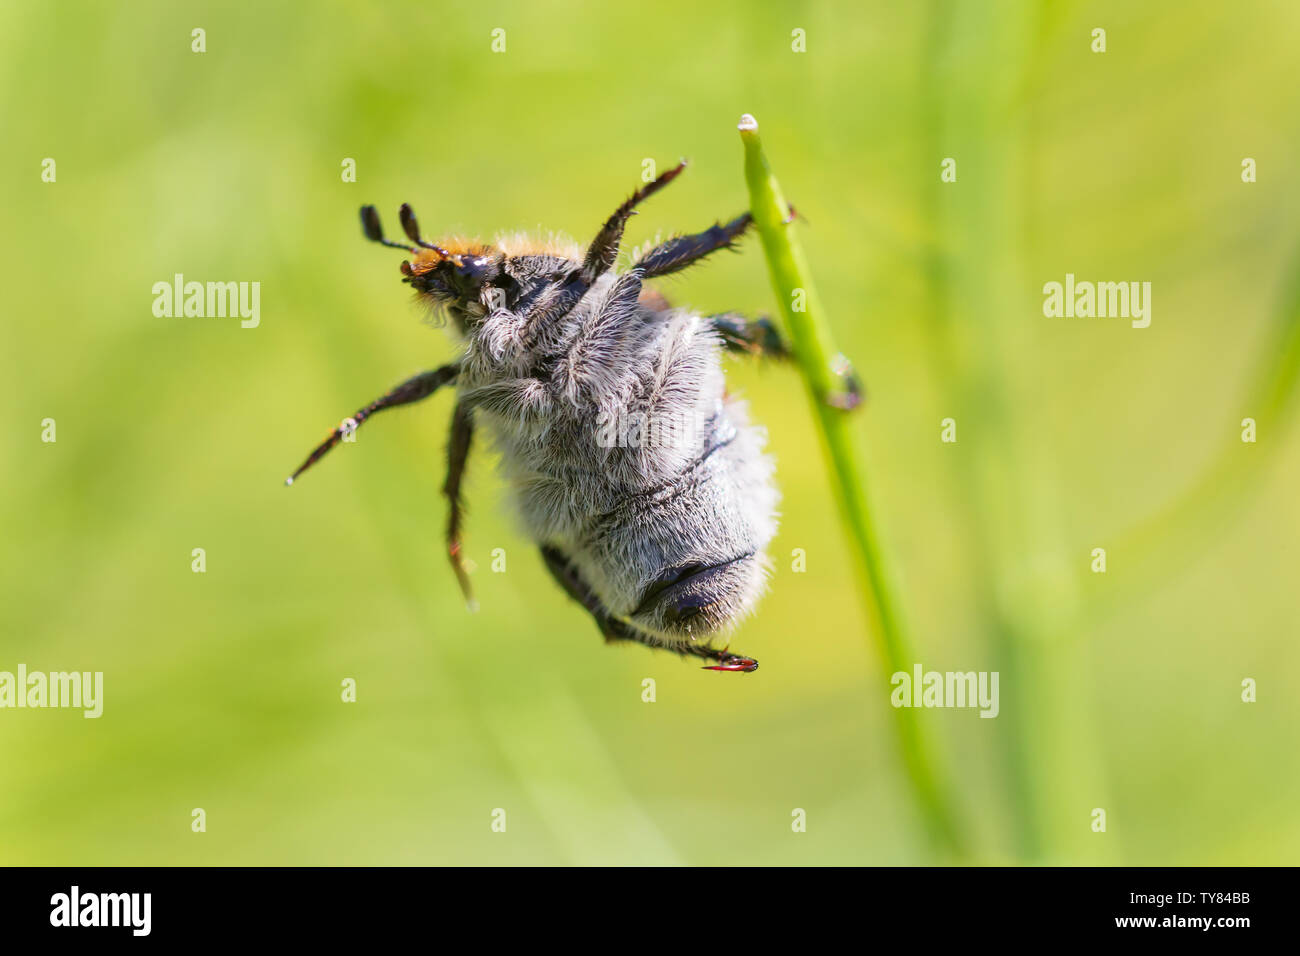 close up of Anisoplia austriaca beetle hanging on plant Stock Photo